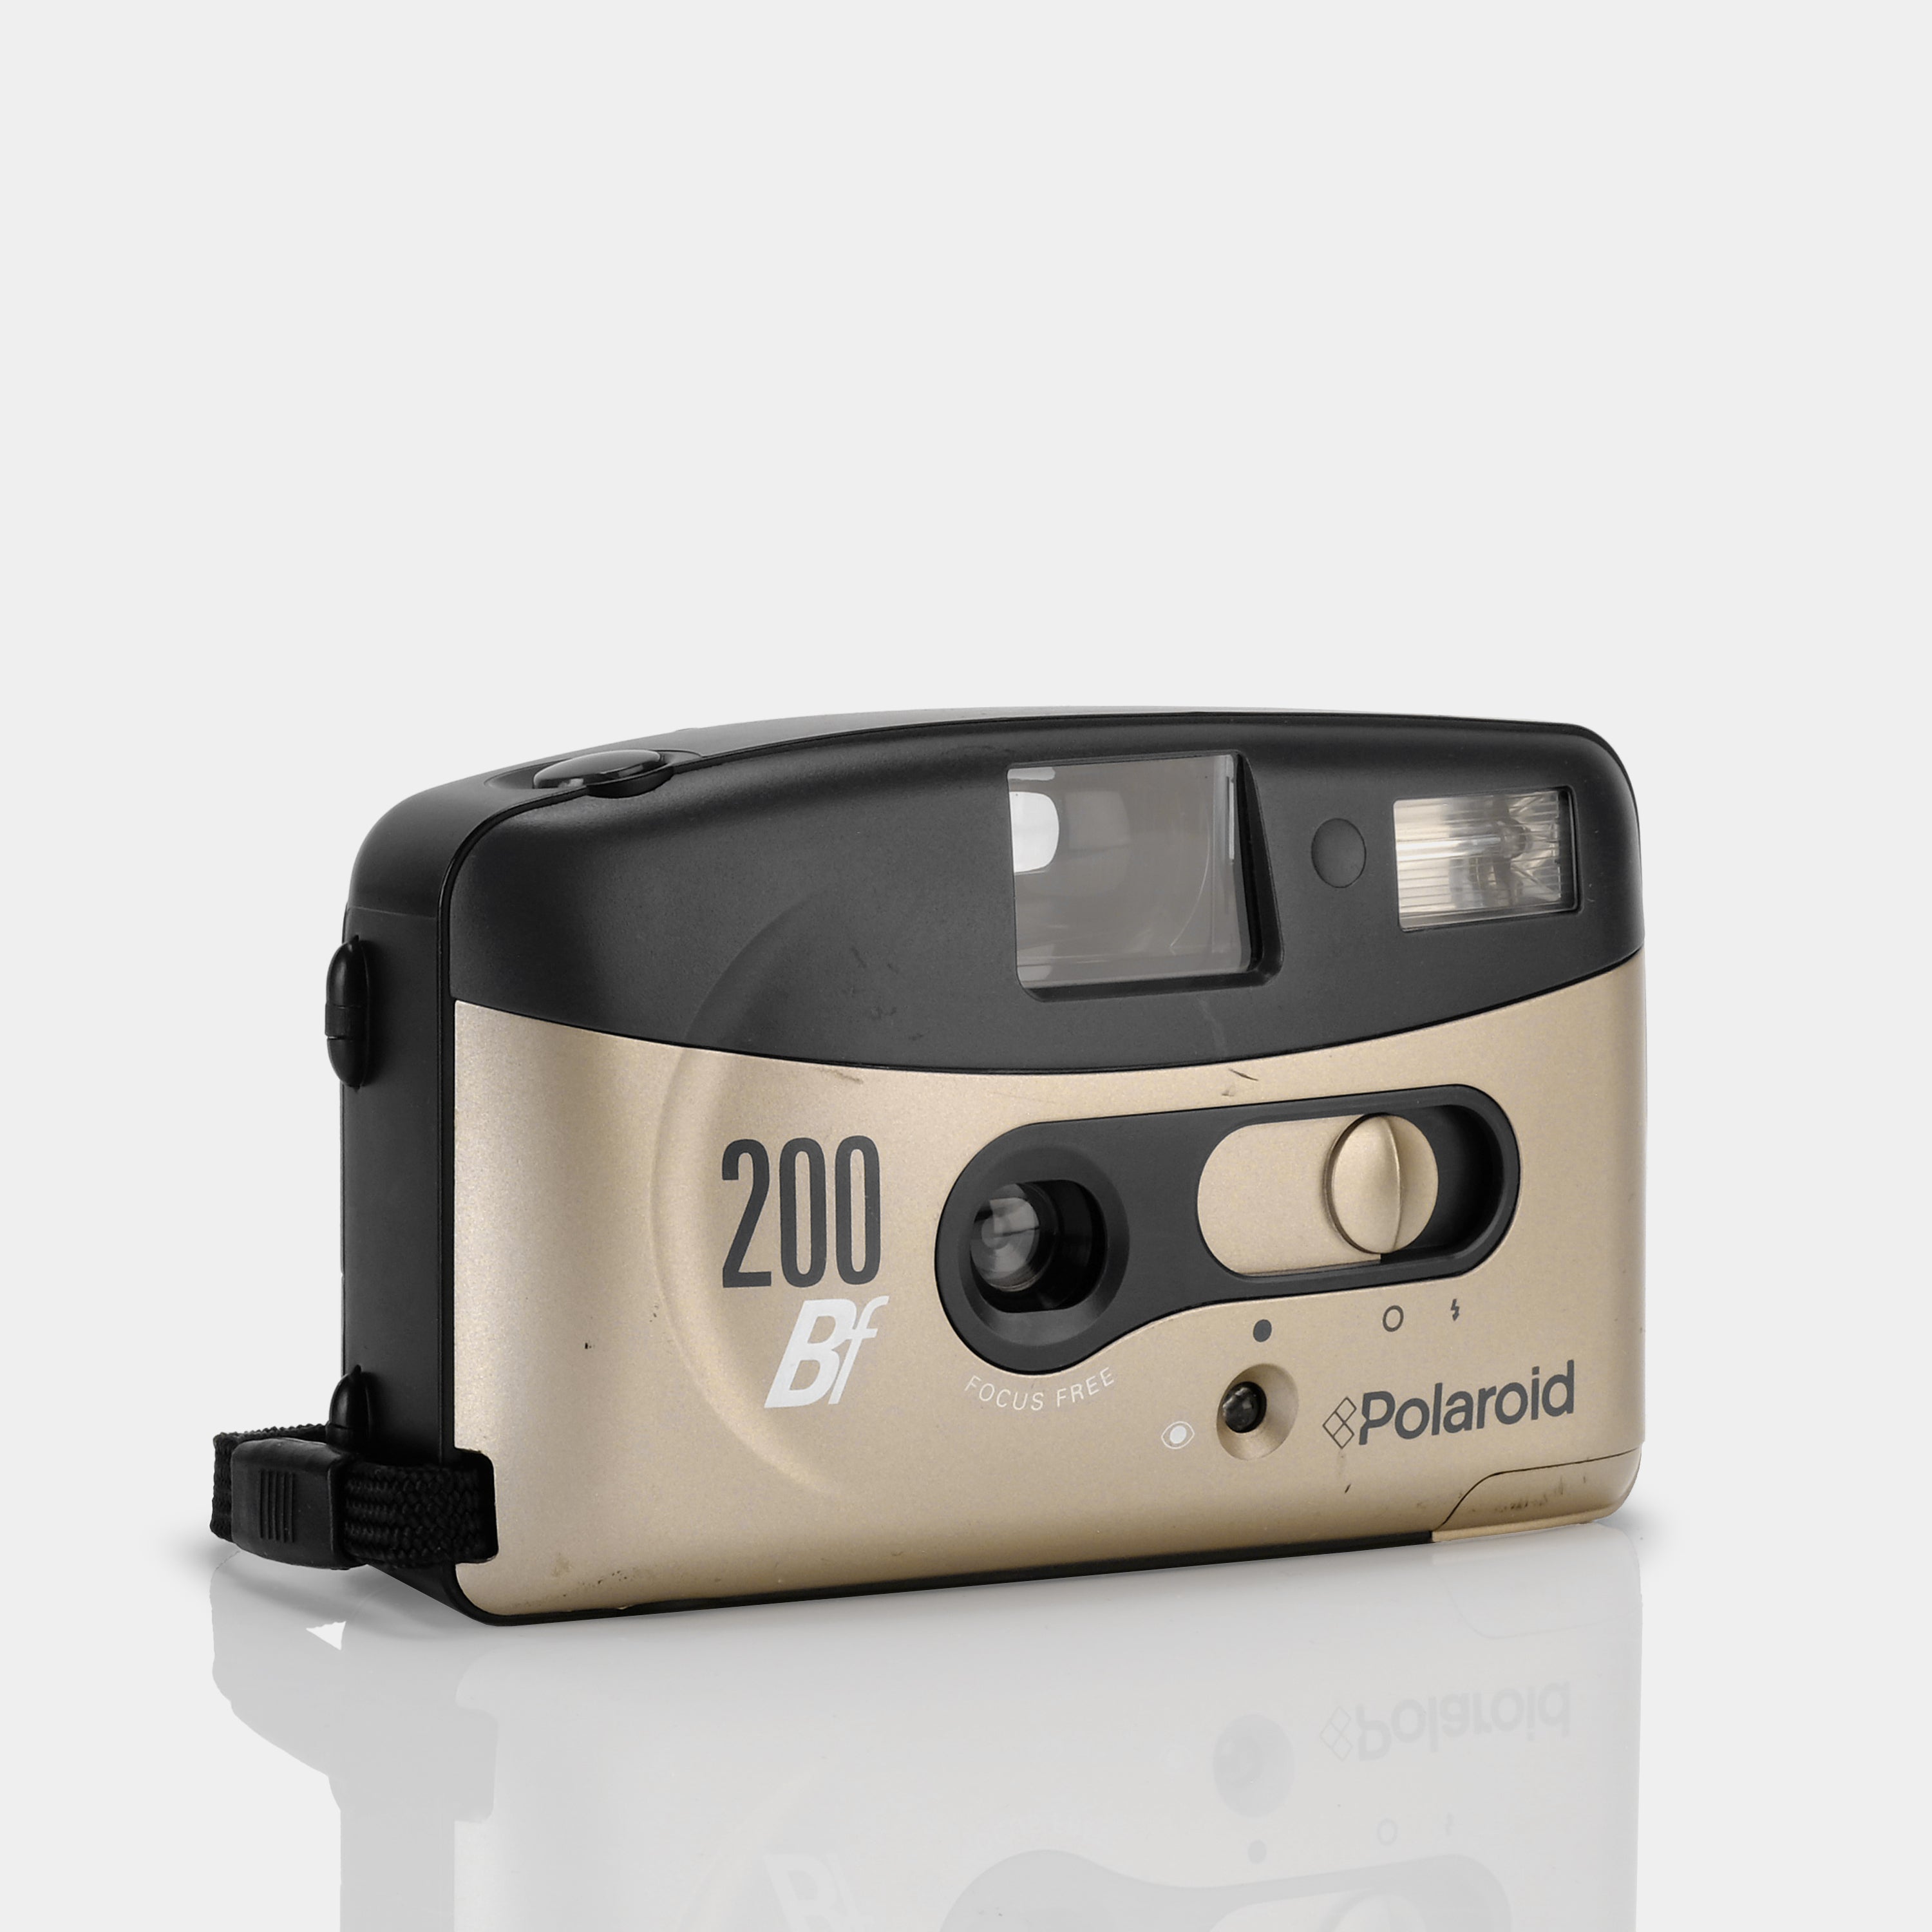 Polaroid 200BF 35mm Point and Shoot Film Camera